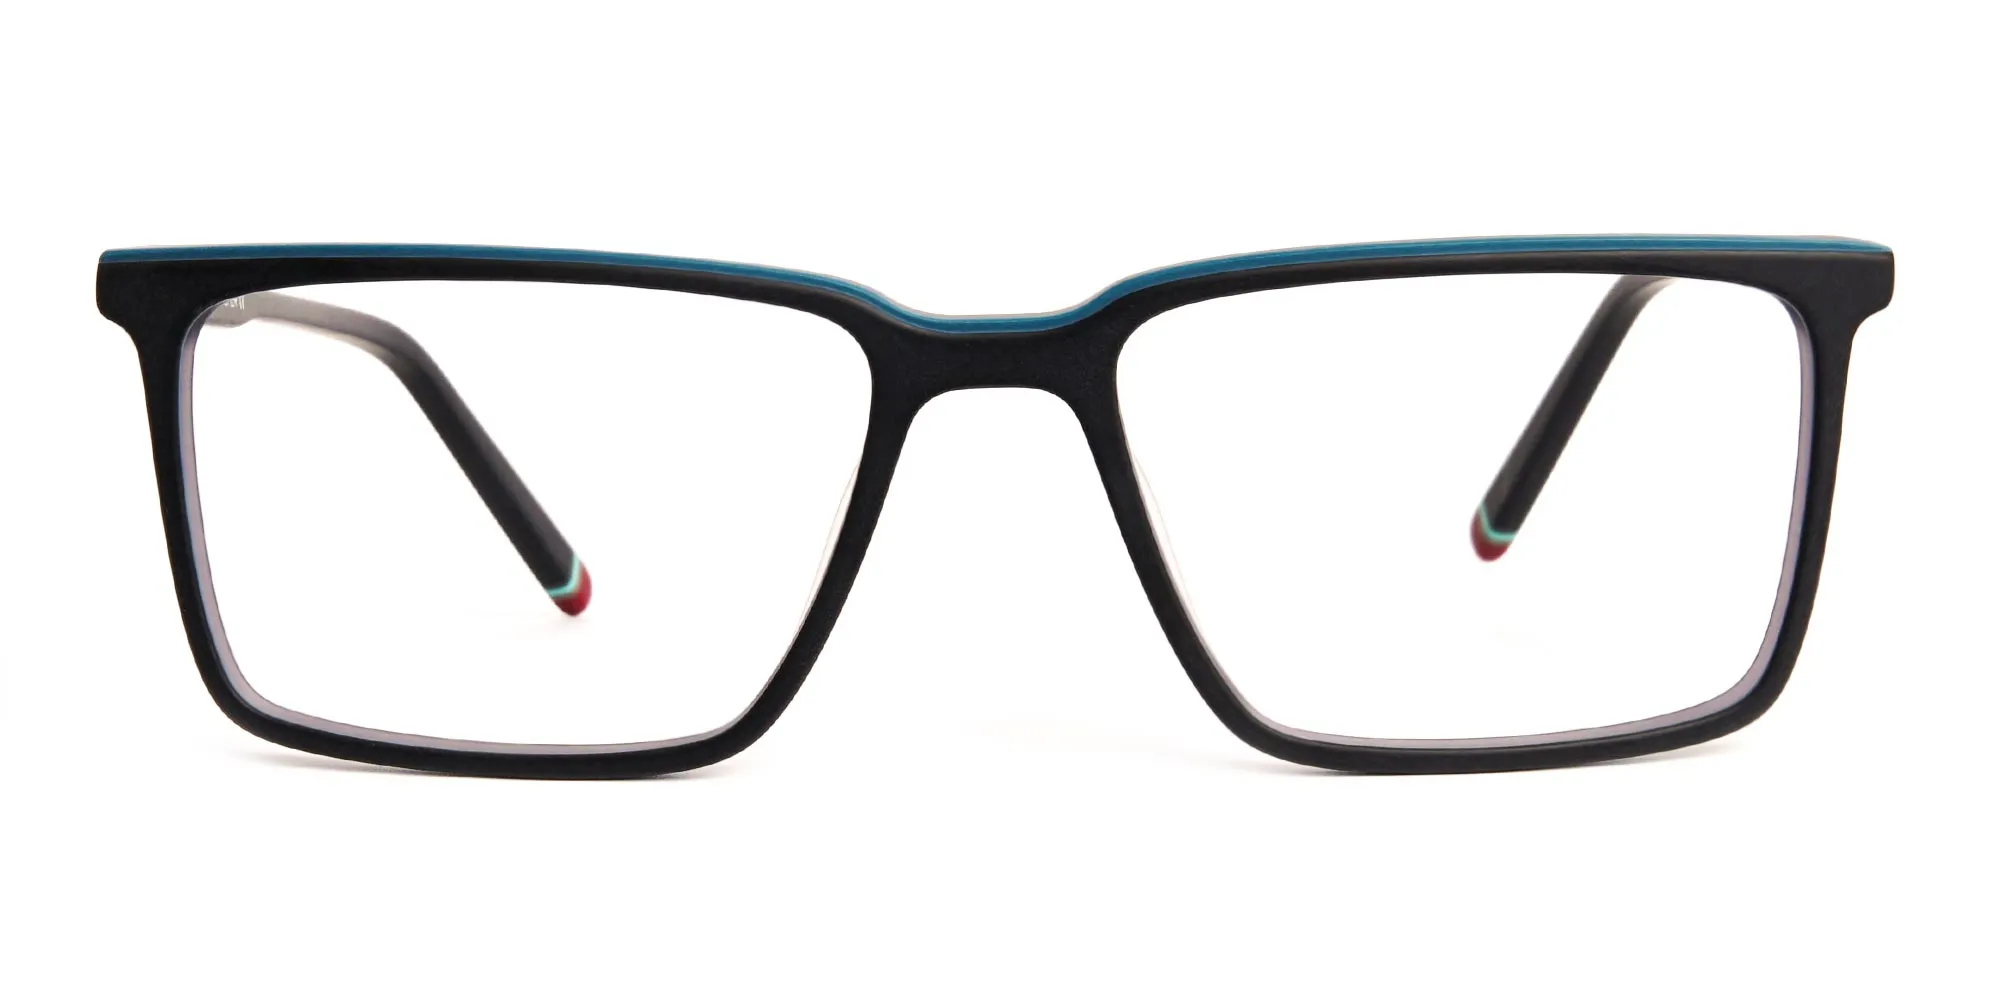 black and teal rectangular glasses frames